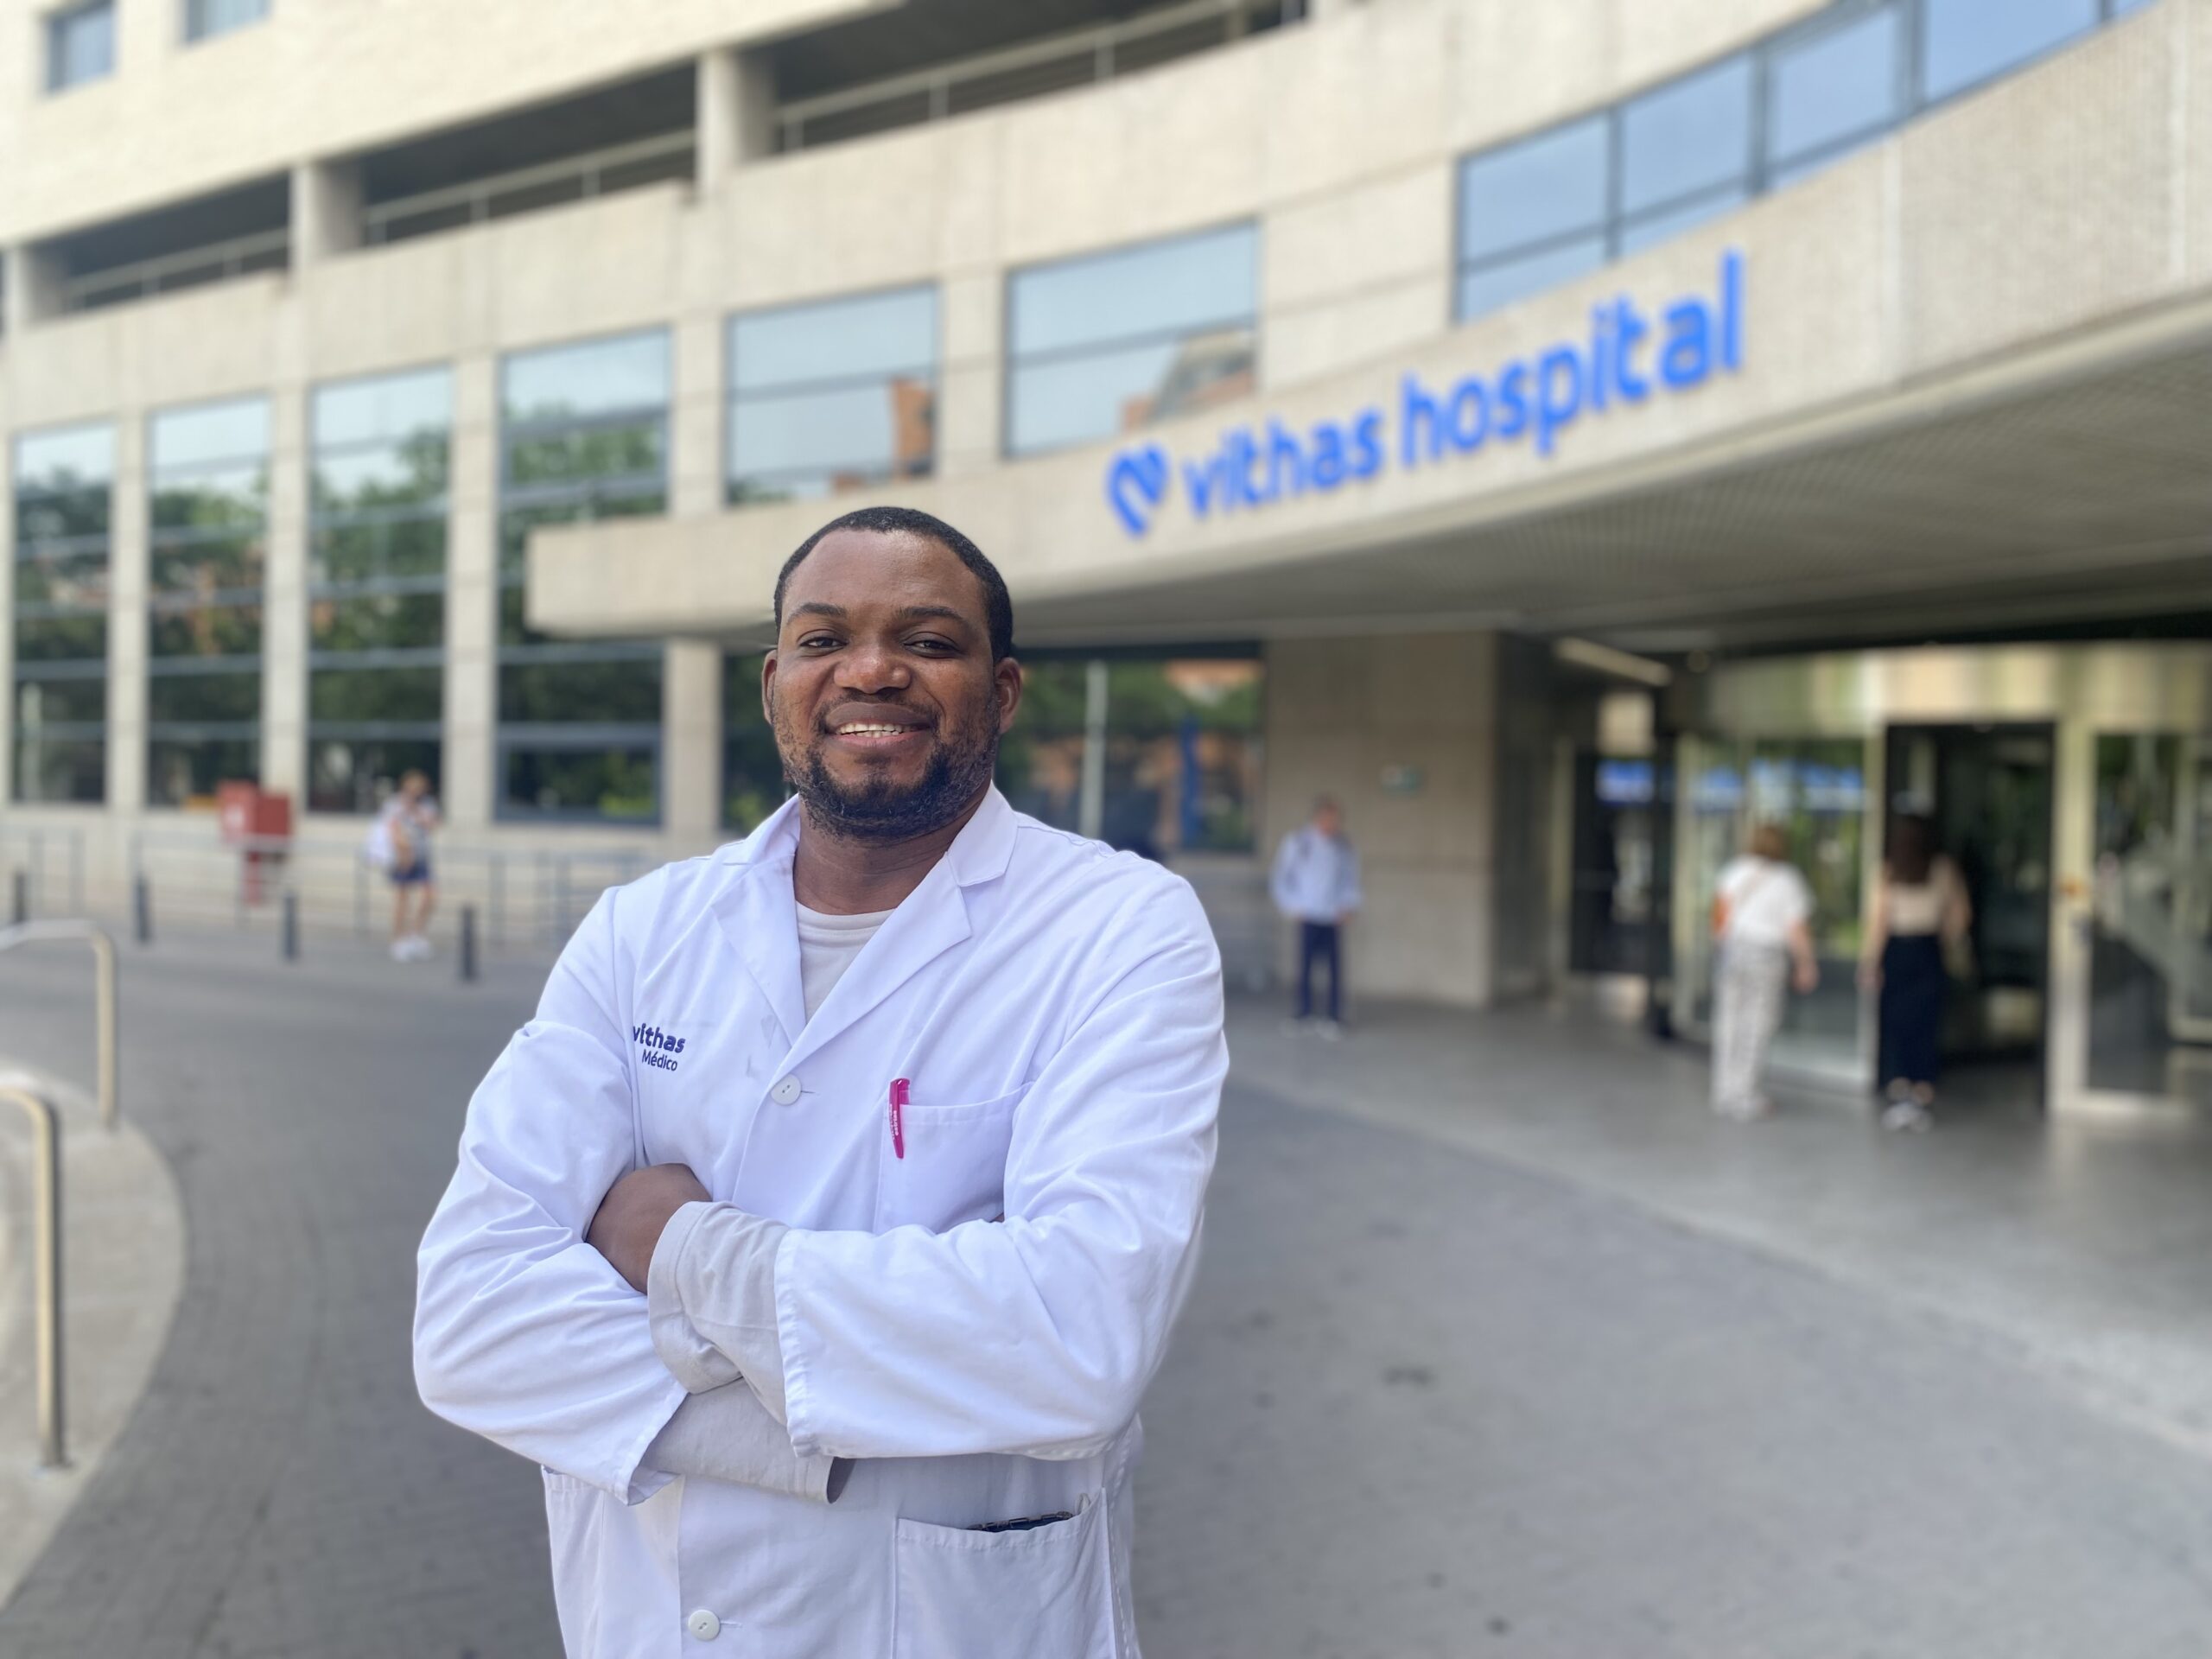 Un médico de Camerún recibe formación urológica en Vithas Valencia 9 de Octubre